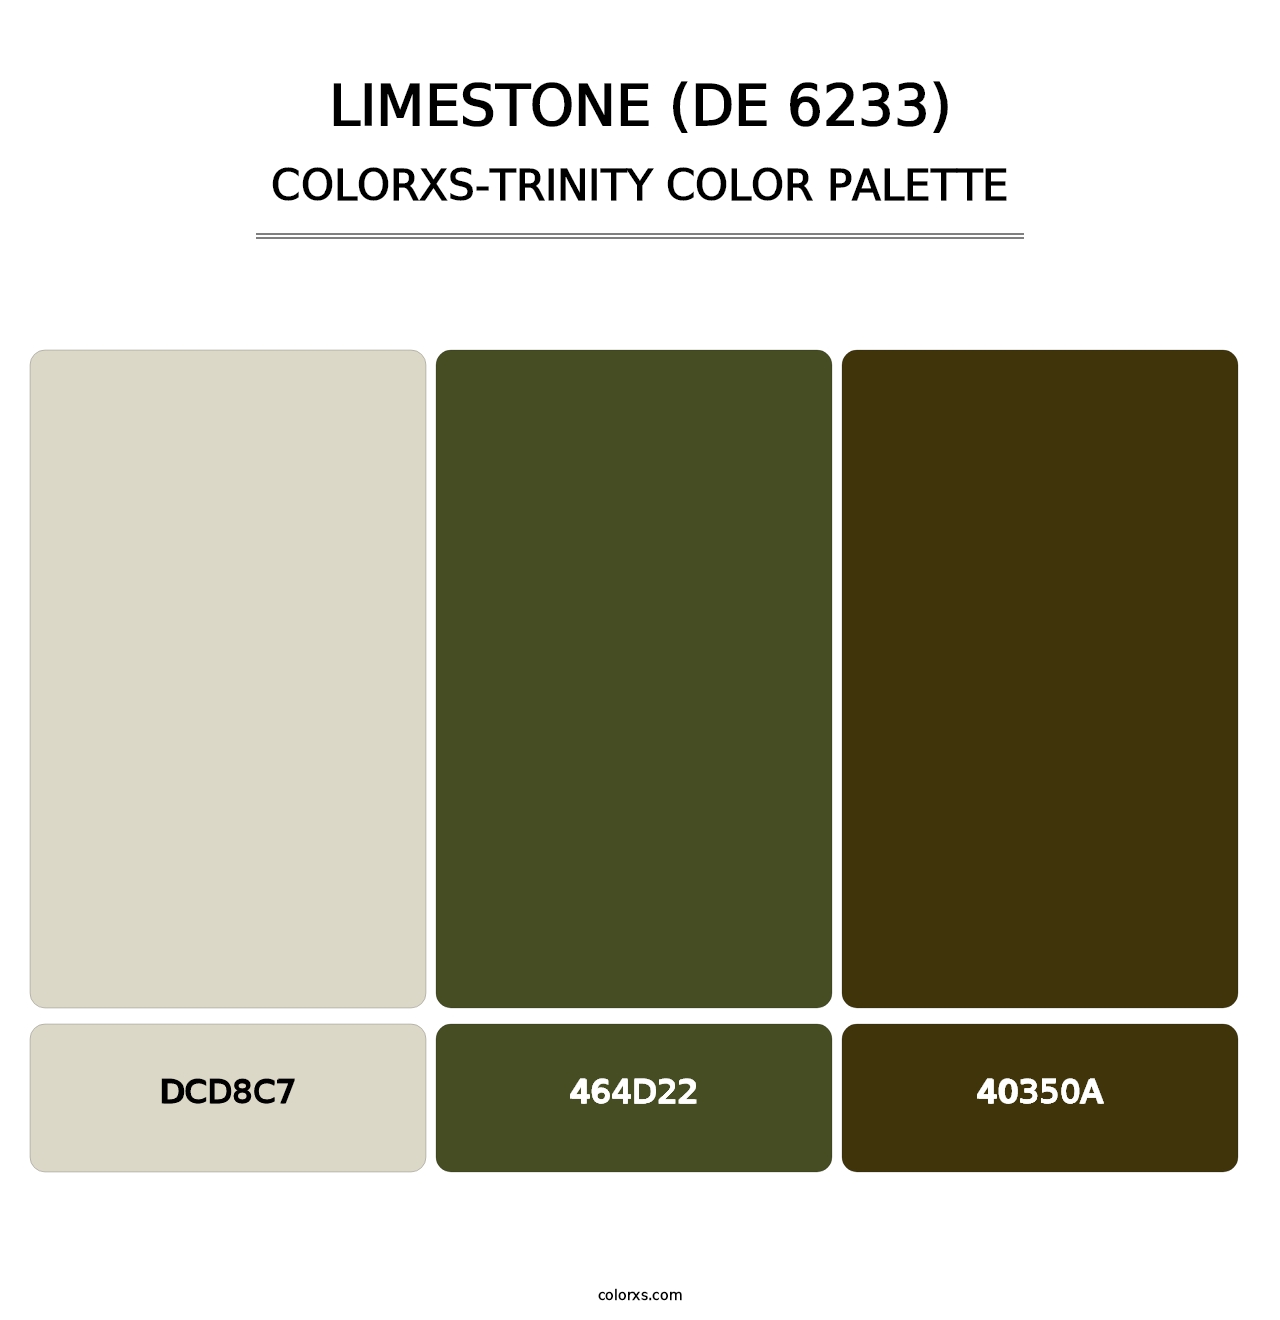 Limestone (DE 6233) - Colorxs Trinity Palette